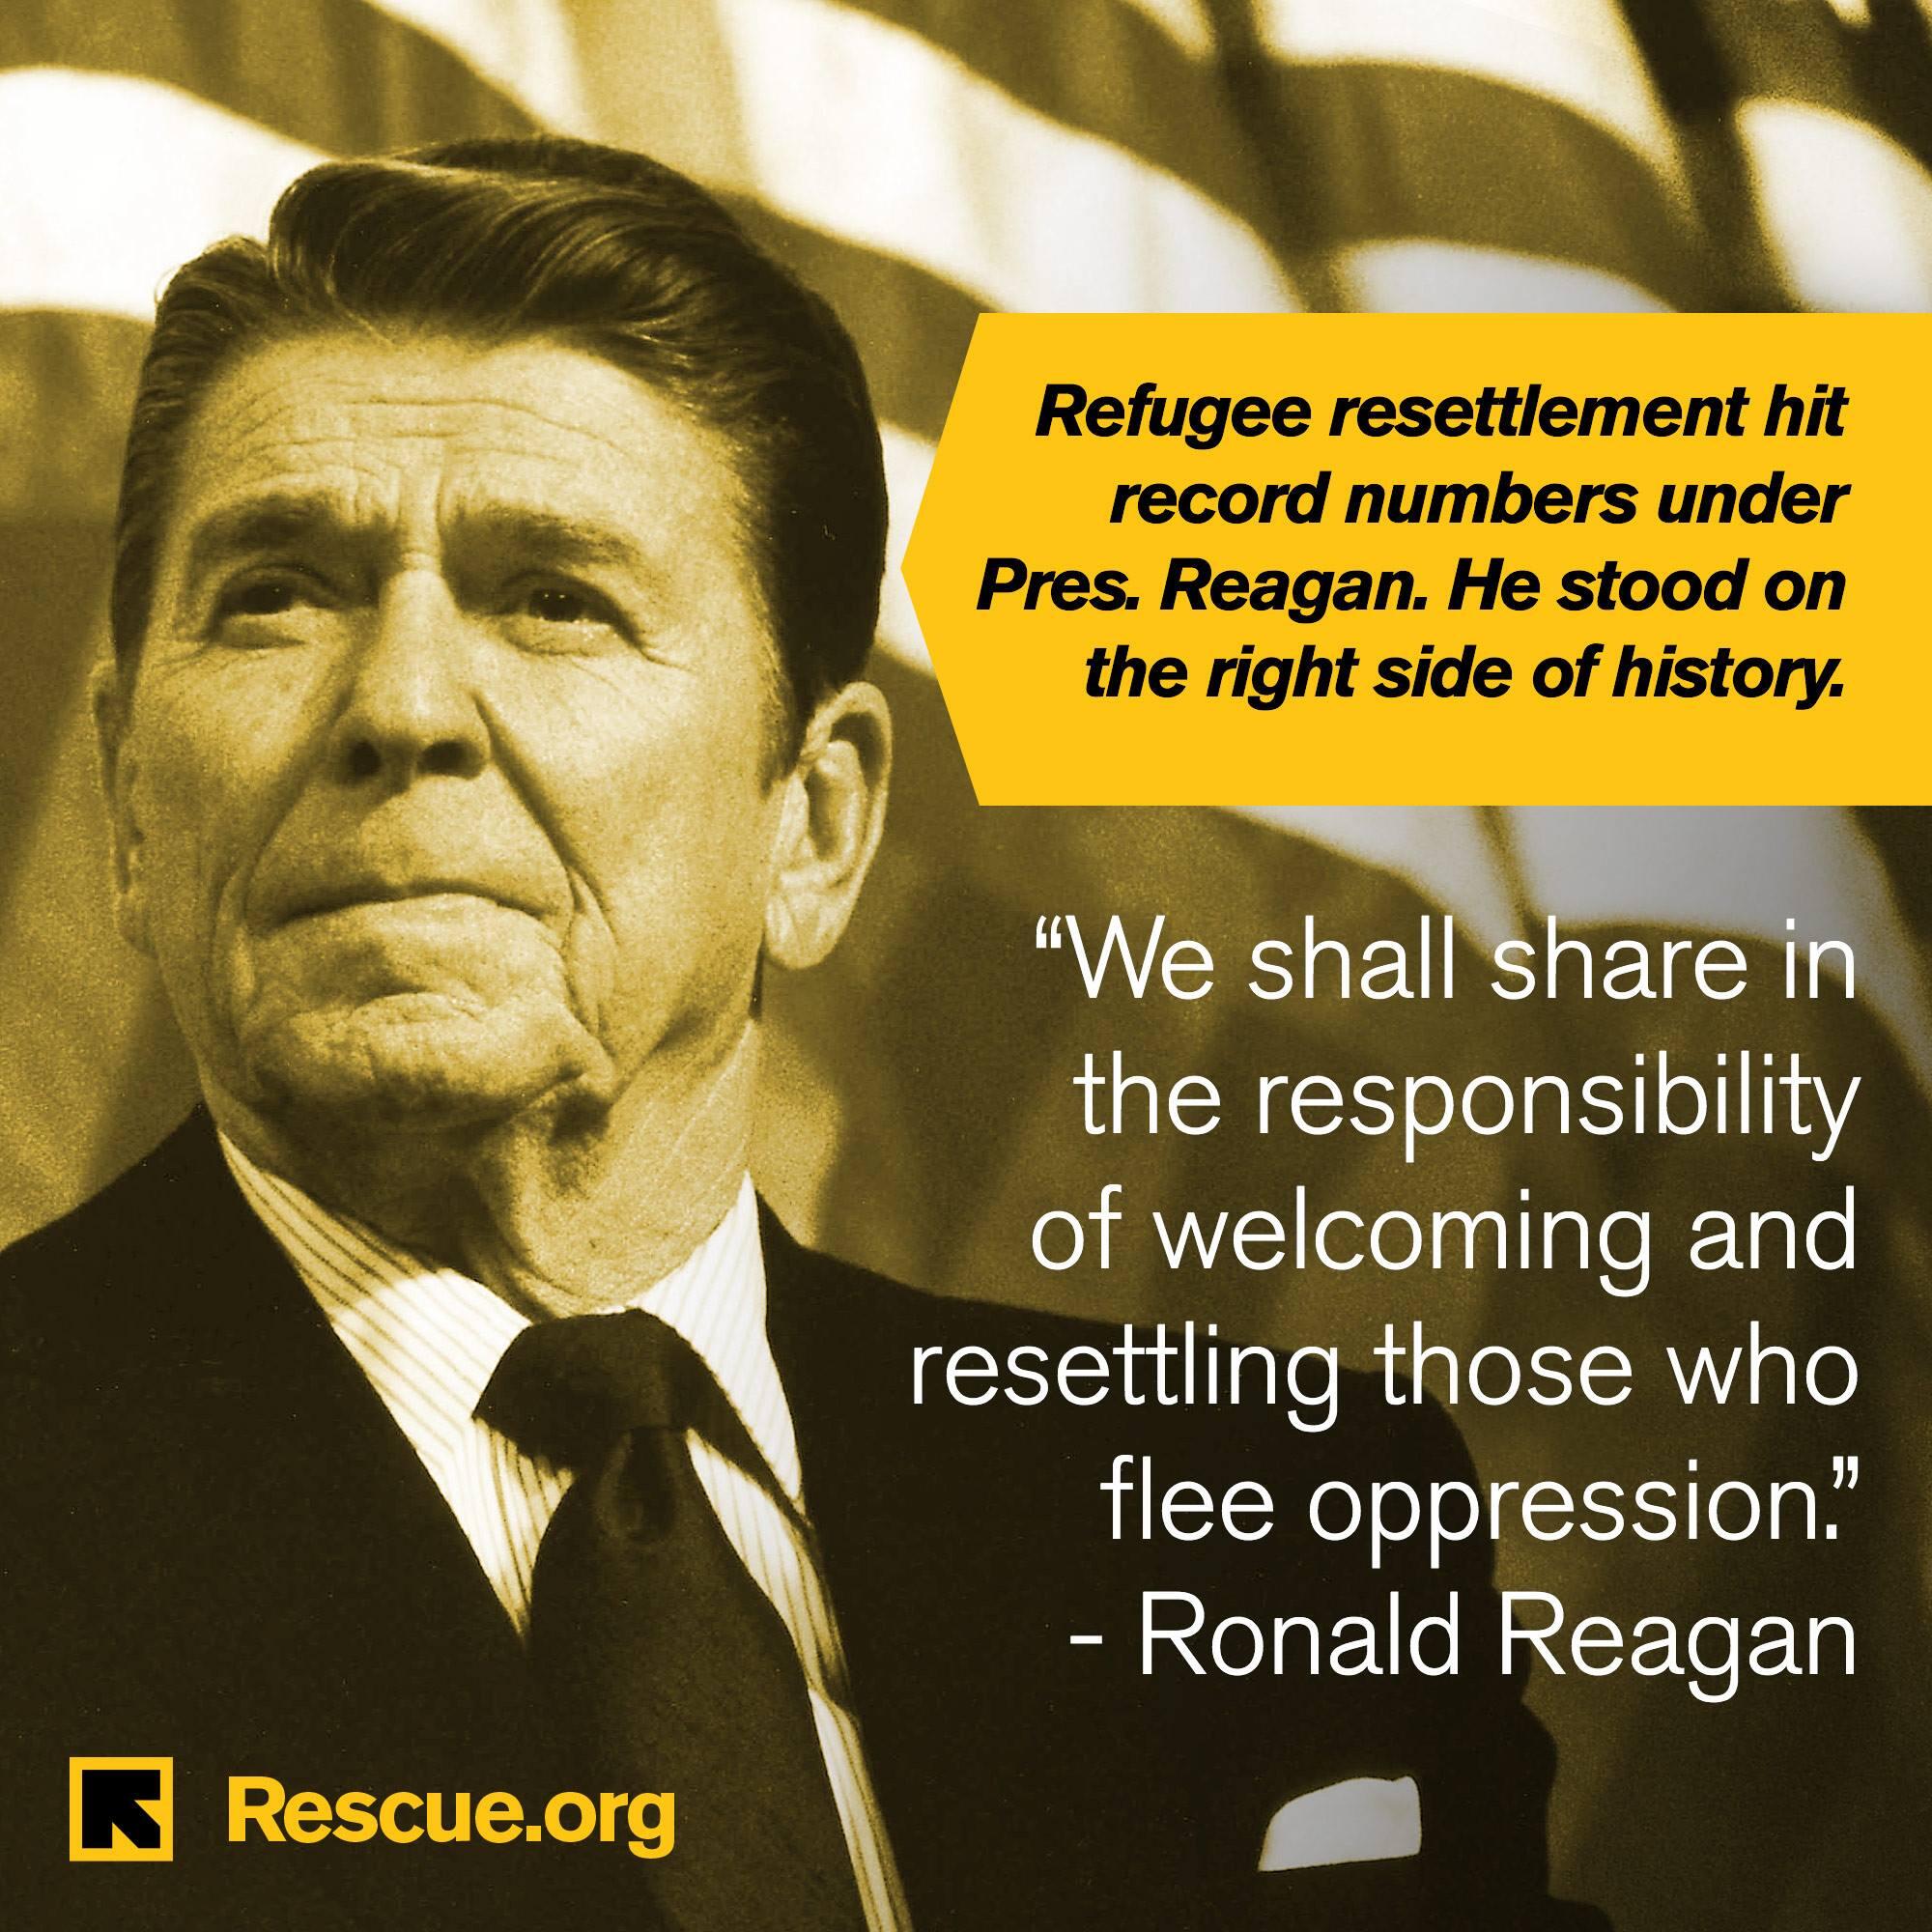 Ronald Reagan U.S. President 